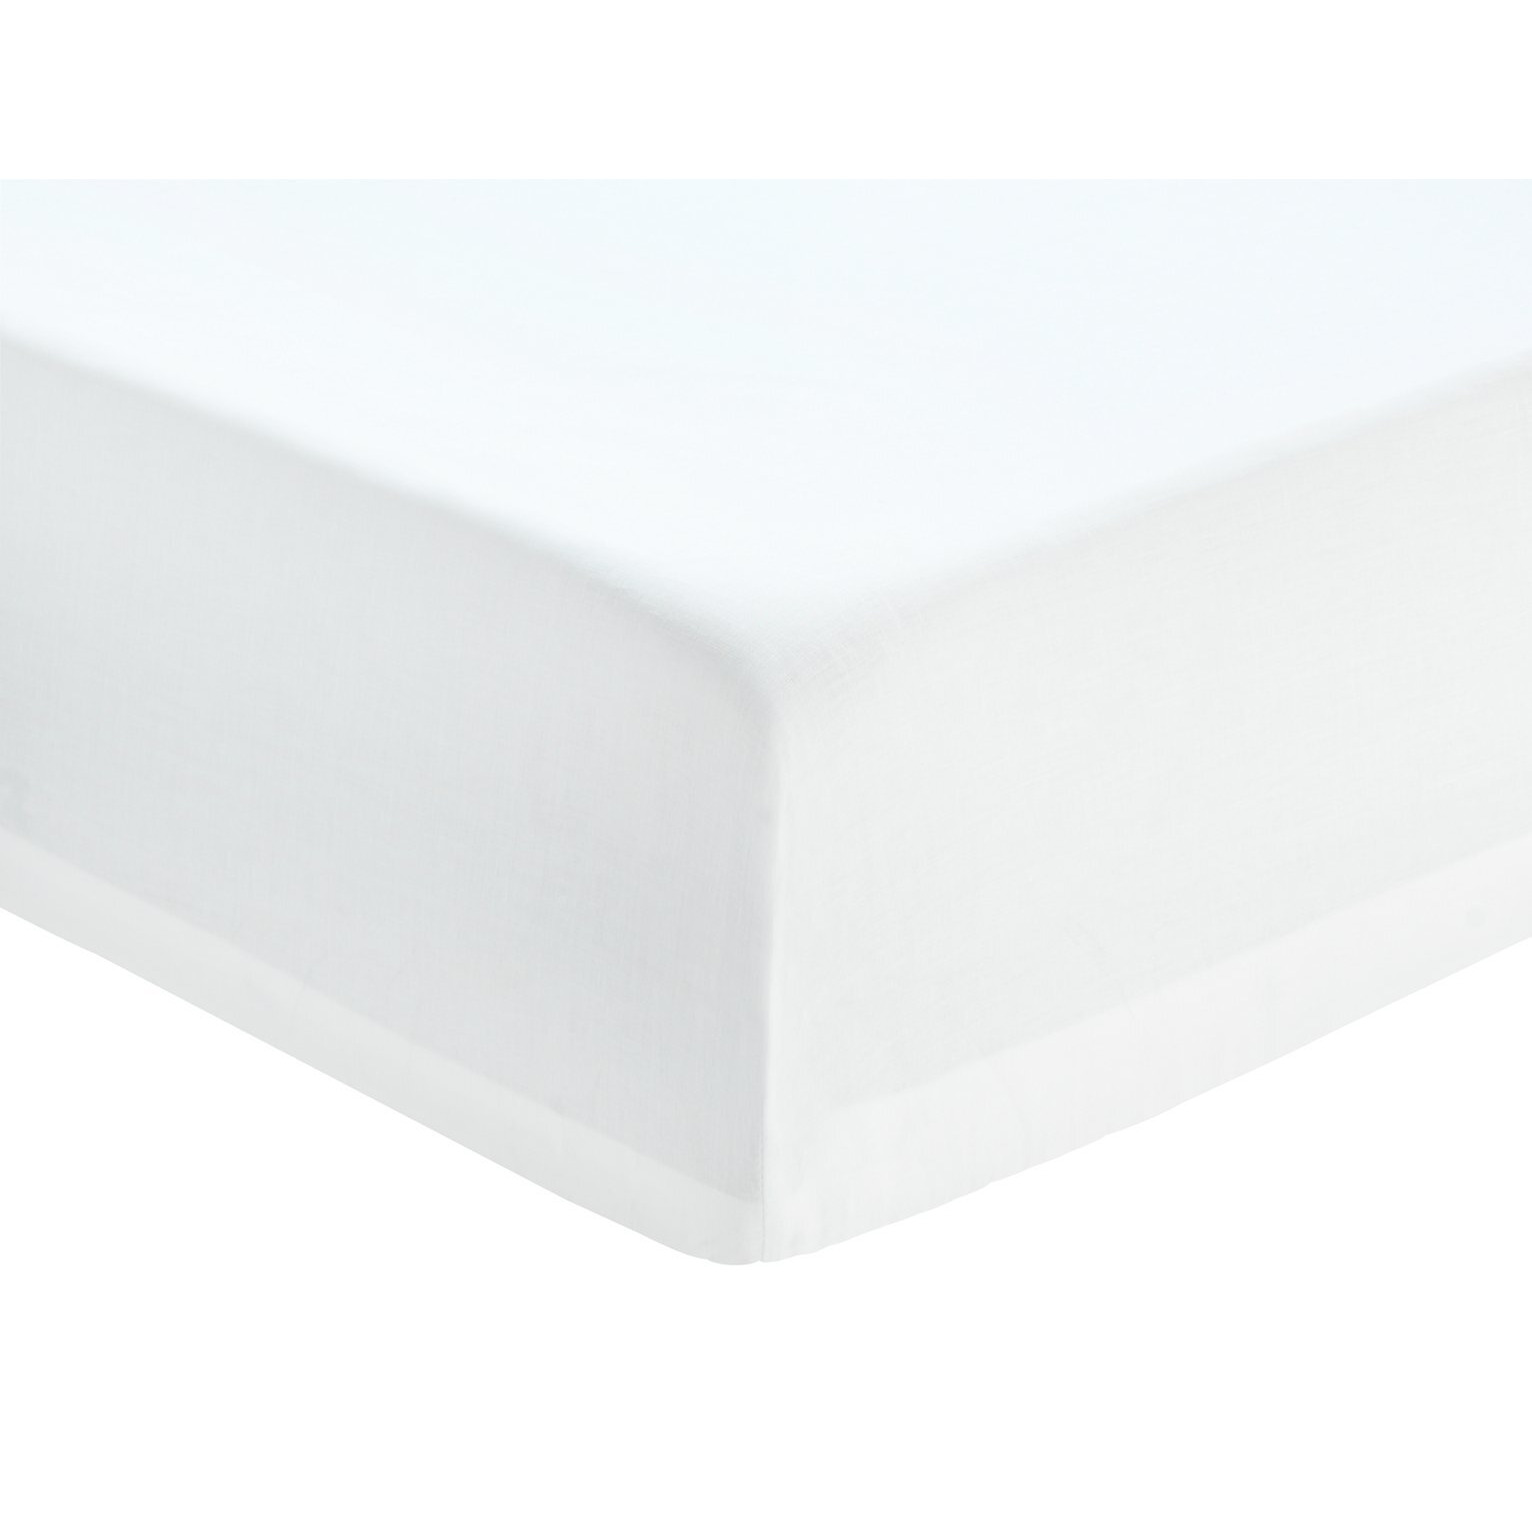 Habitat Easycare Plain White Fitted Sheet - Double - image 1